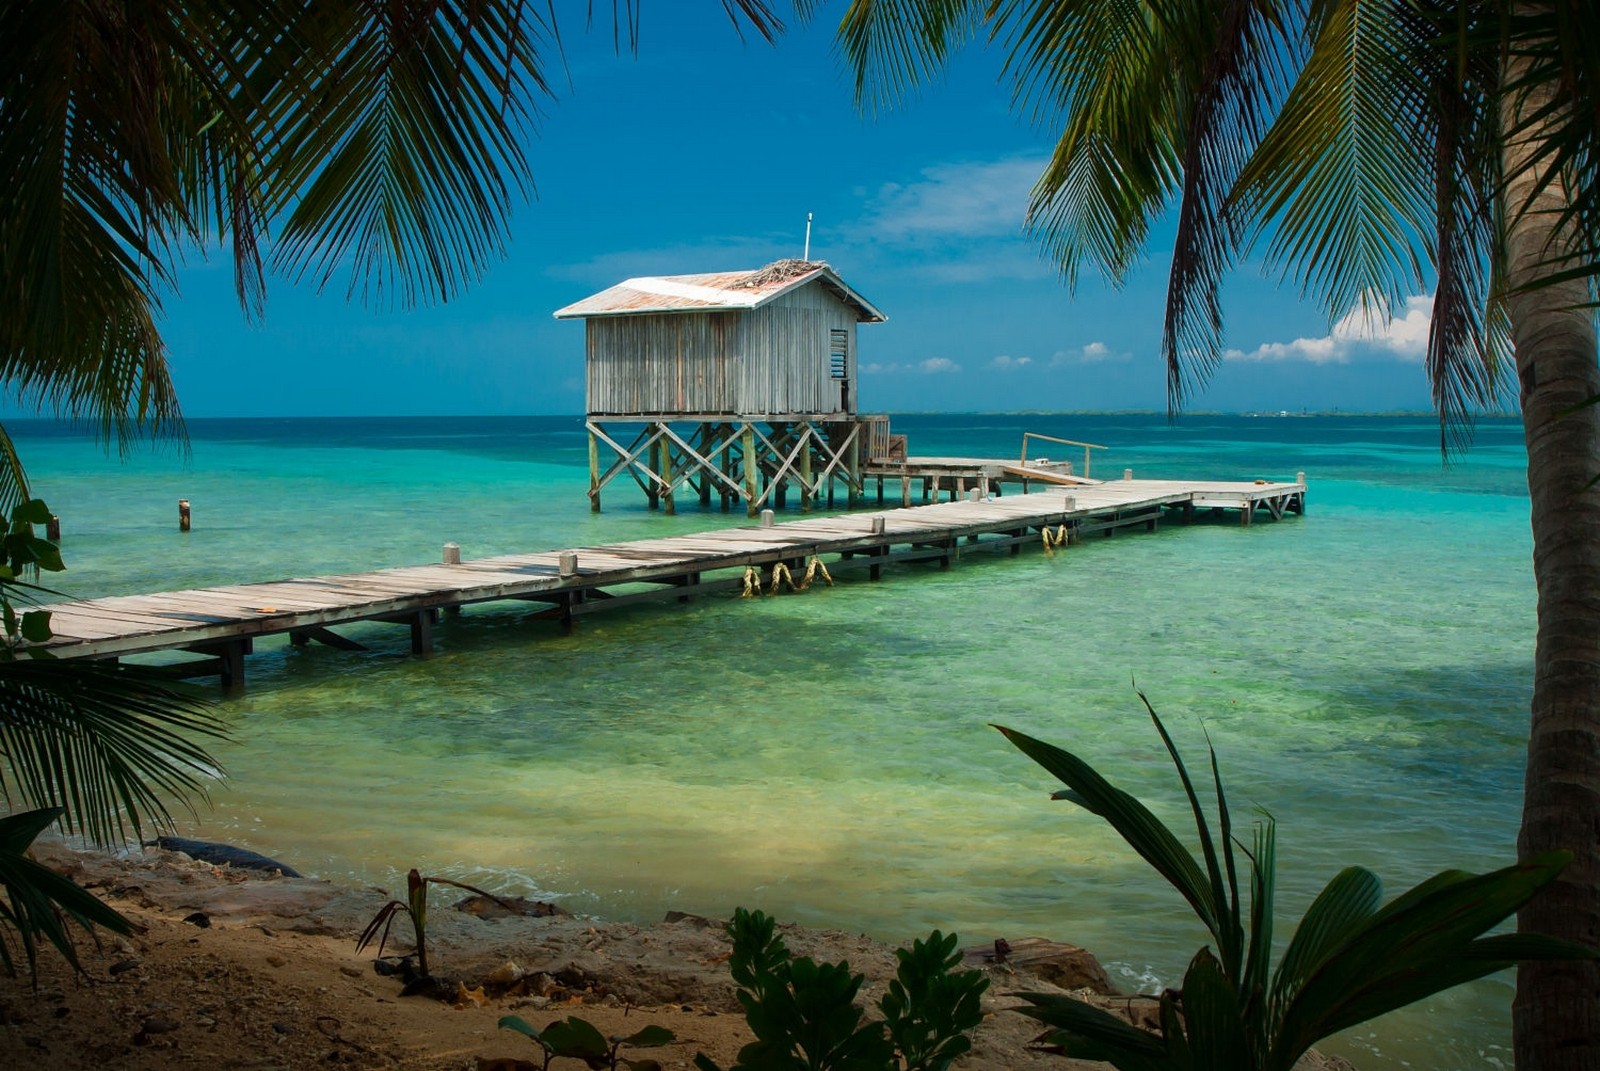 Nature Photography Landscape Caribbean Sea Dock Hut Beach Palm Trees Tropical Belize 1600x1071